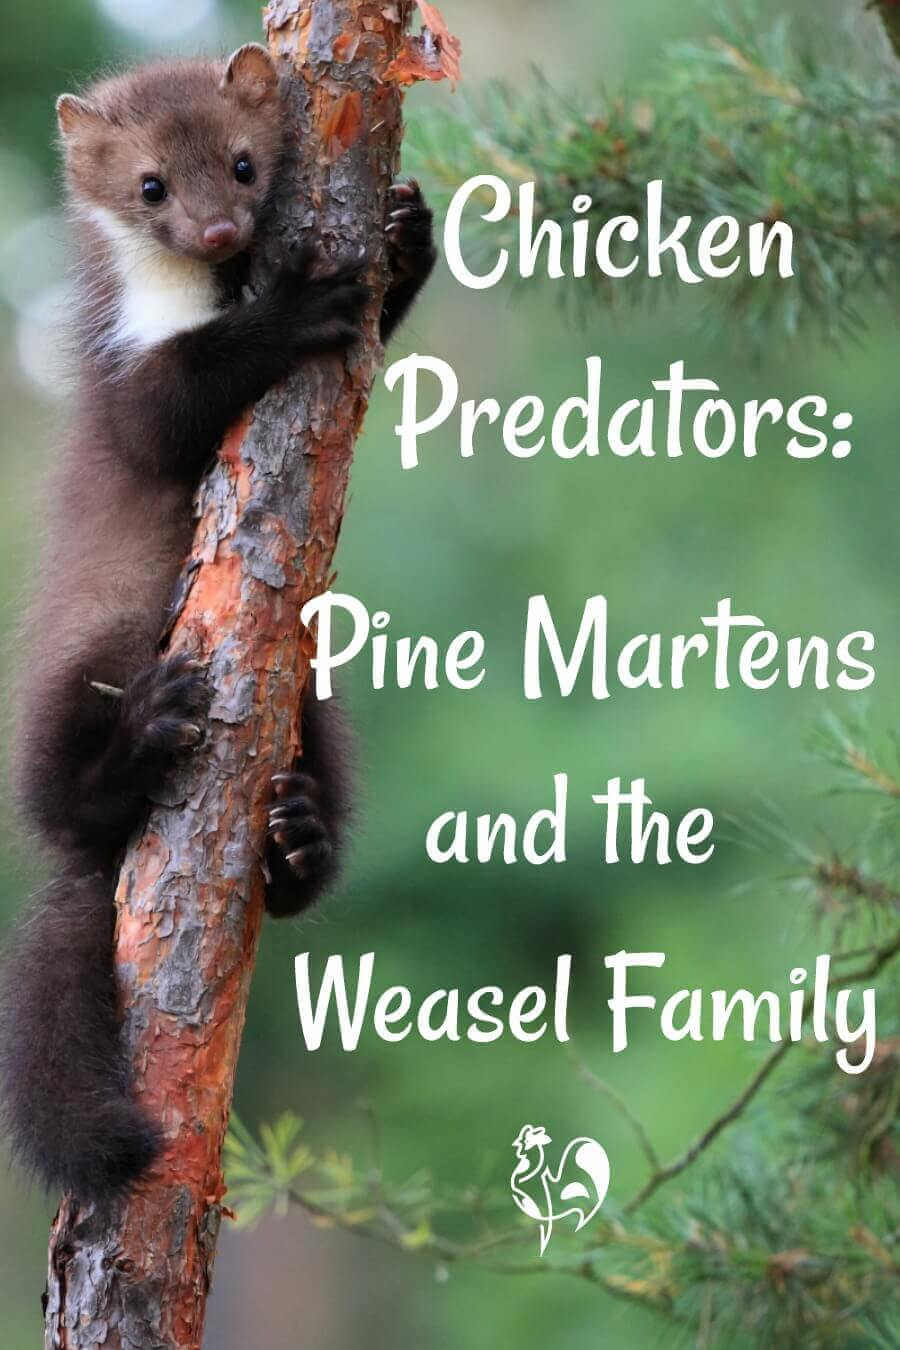 The pine marten: a cute but lethal chicken predator.